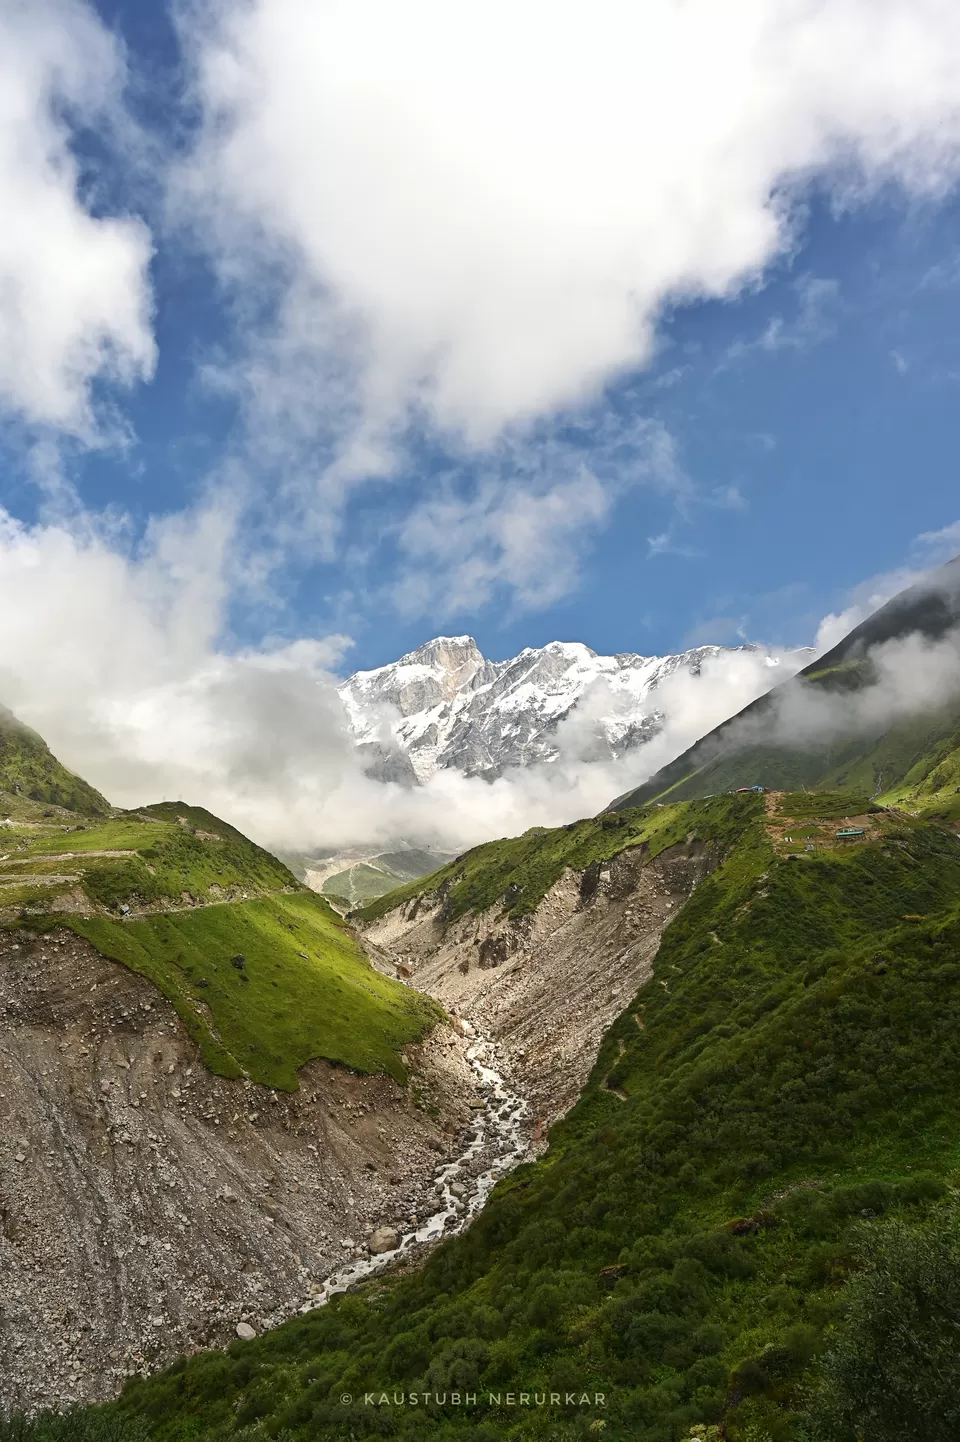 Photo of A Solo Trip to Kedarnath #TravelAdventure2019 by kaustubh nerurkar